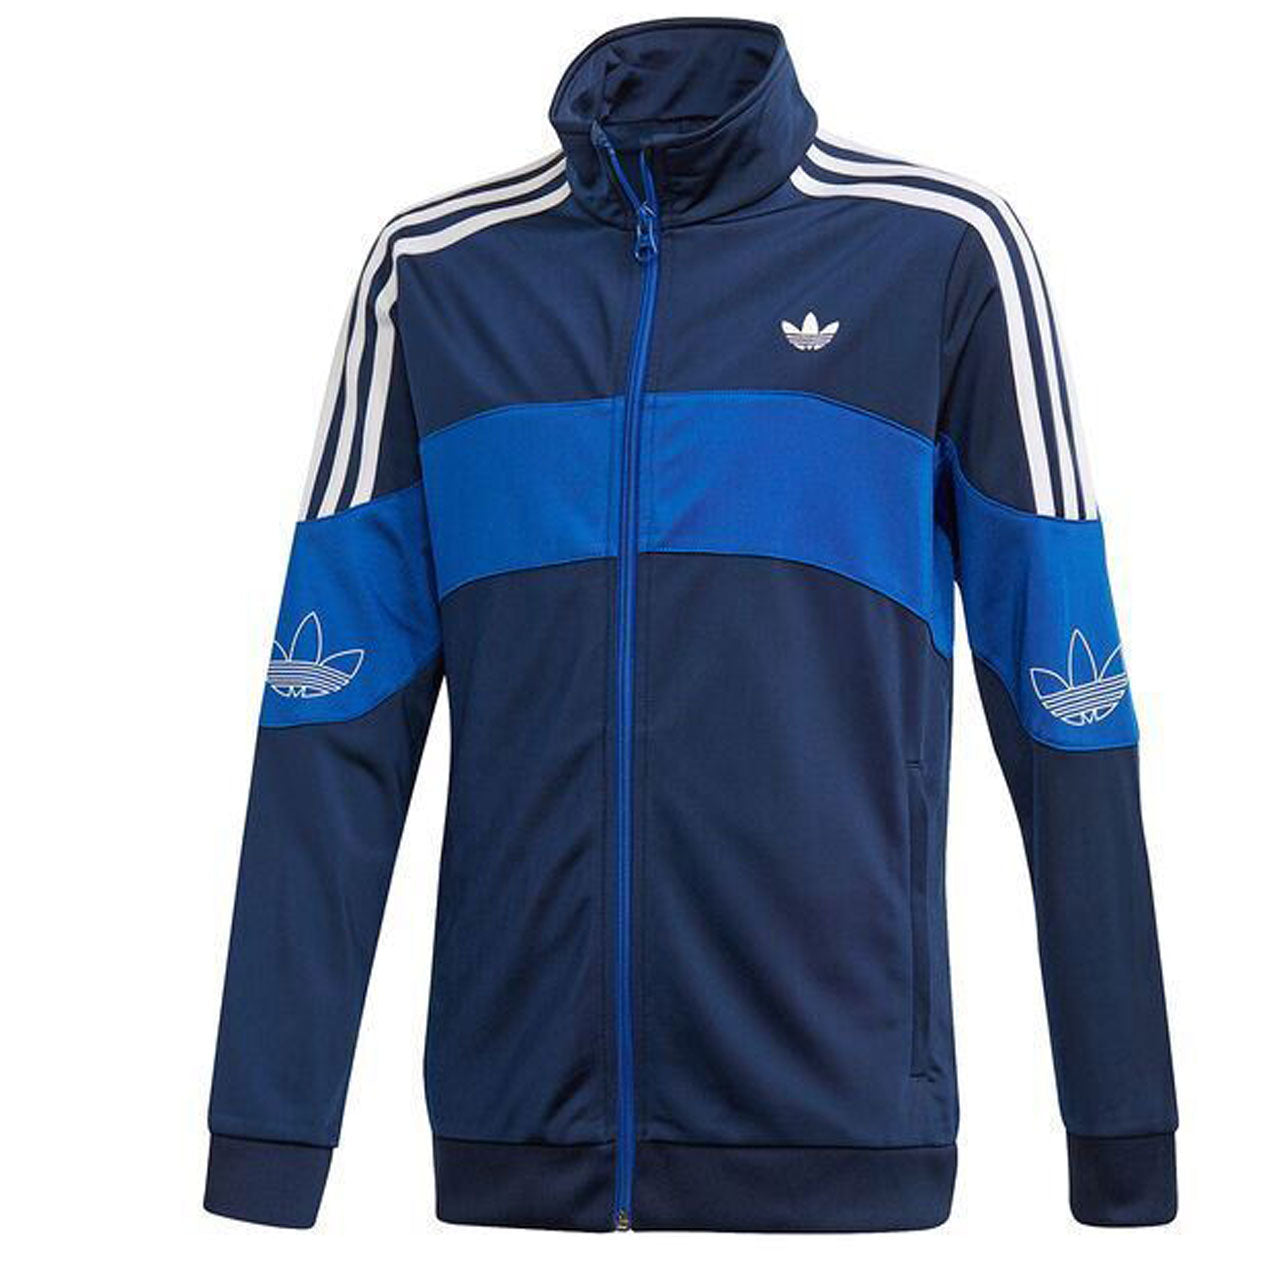 Adidas Kids Track Jacket 7-16yrs Sports 3 Stripe Jacket Royal Blue - MRGOUTLETS